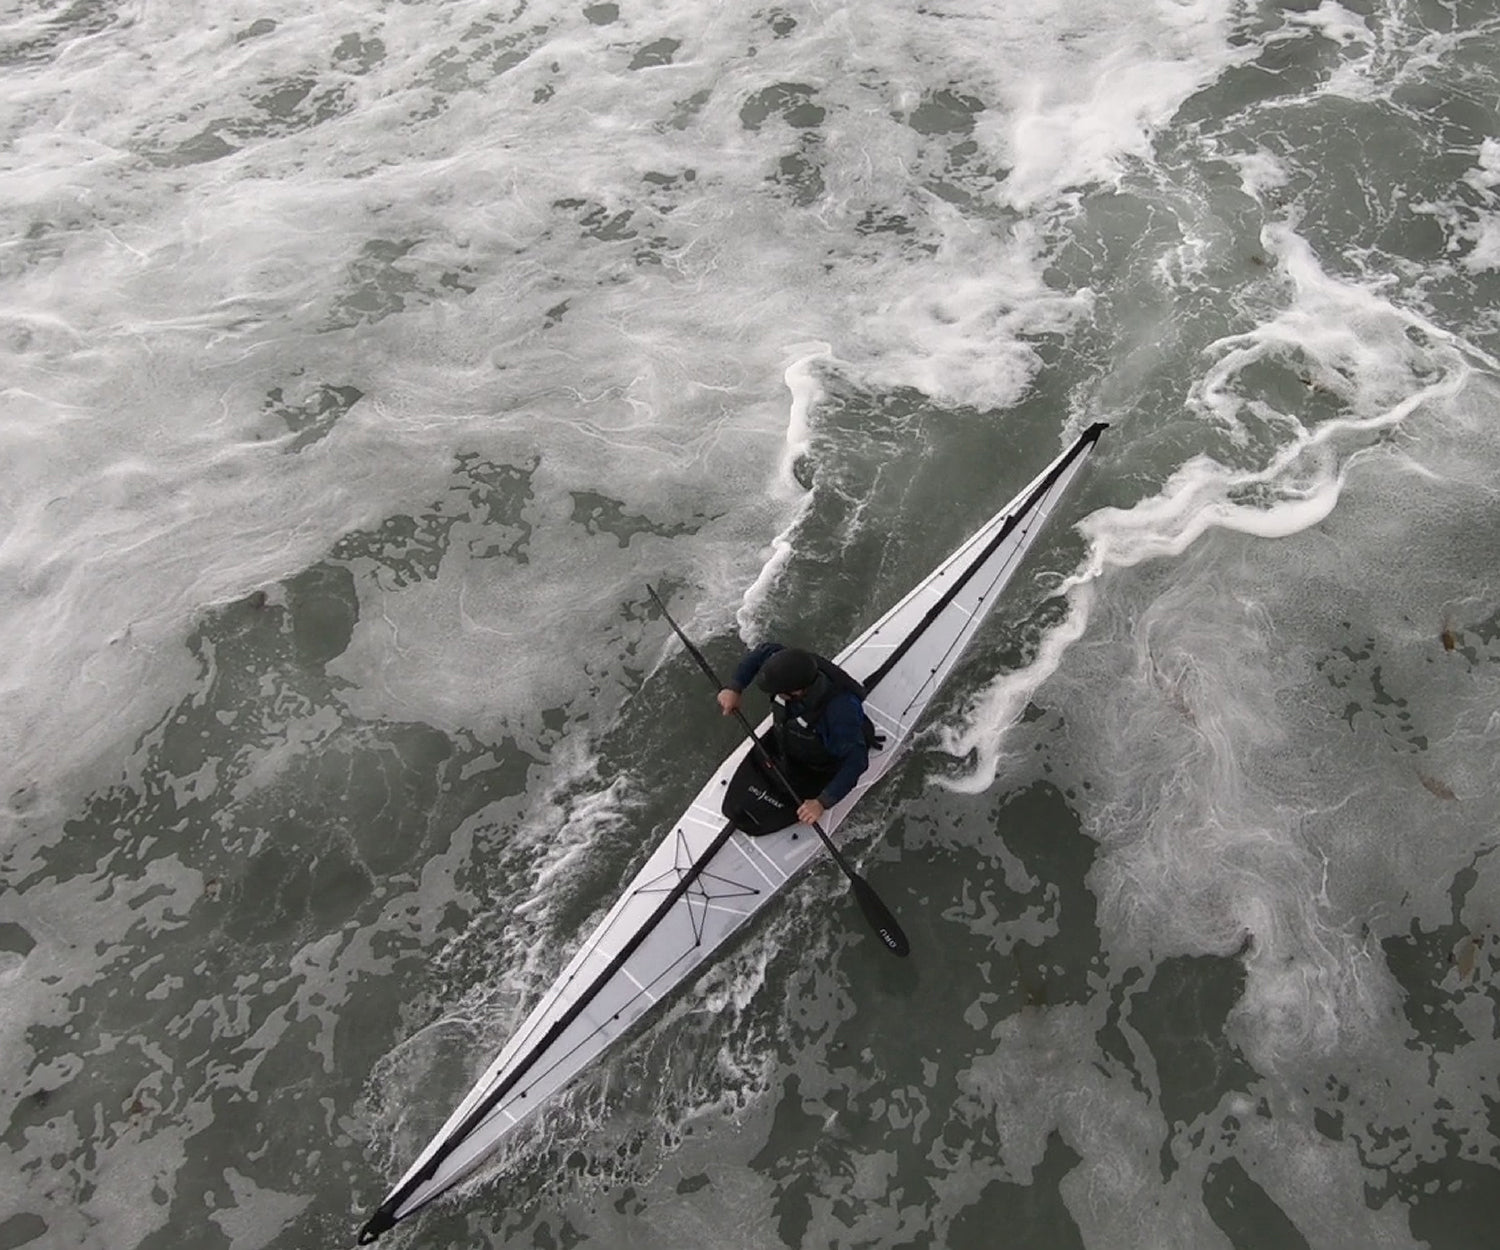 Oru - Folding Kayak - Coast XT, Length: 16'2", 32 lbs, 400 lbs capacity